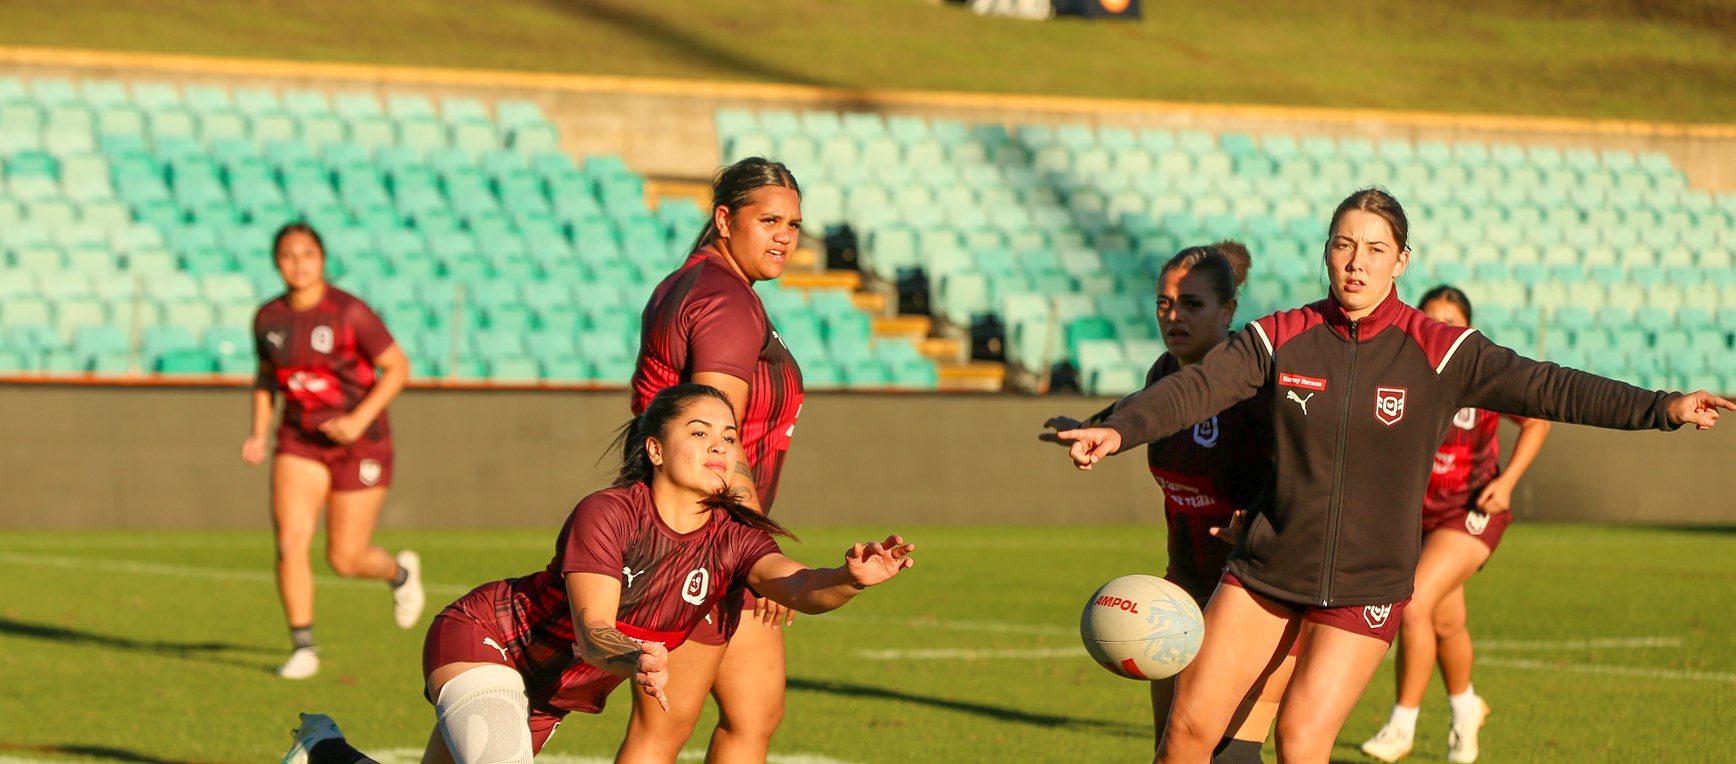 In pictures: Queensland Under 19 girls' captains run